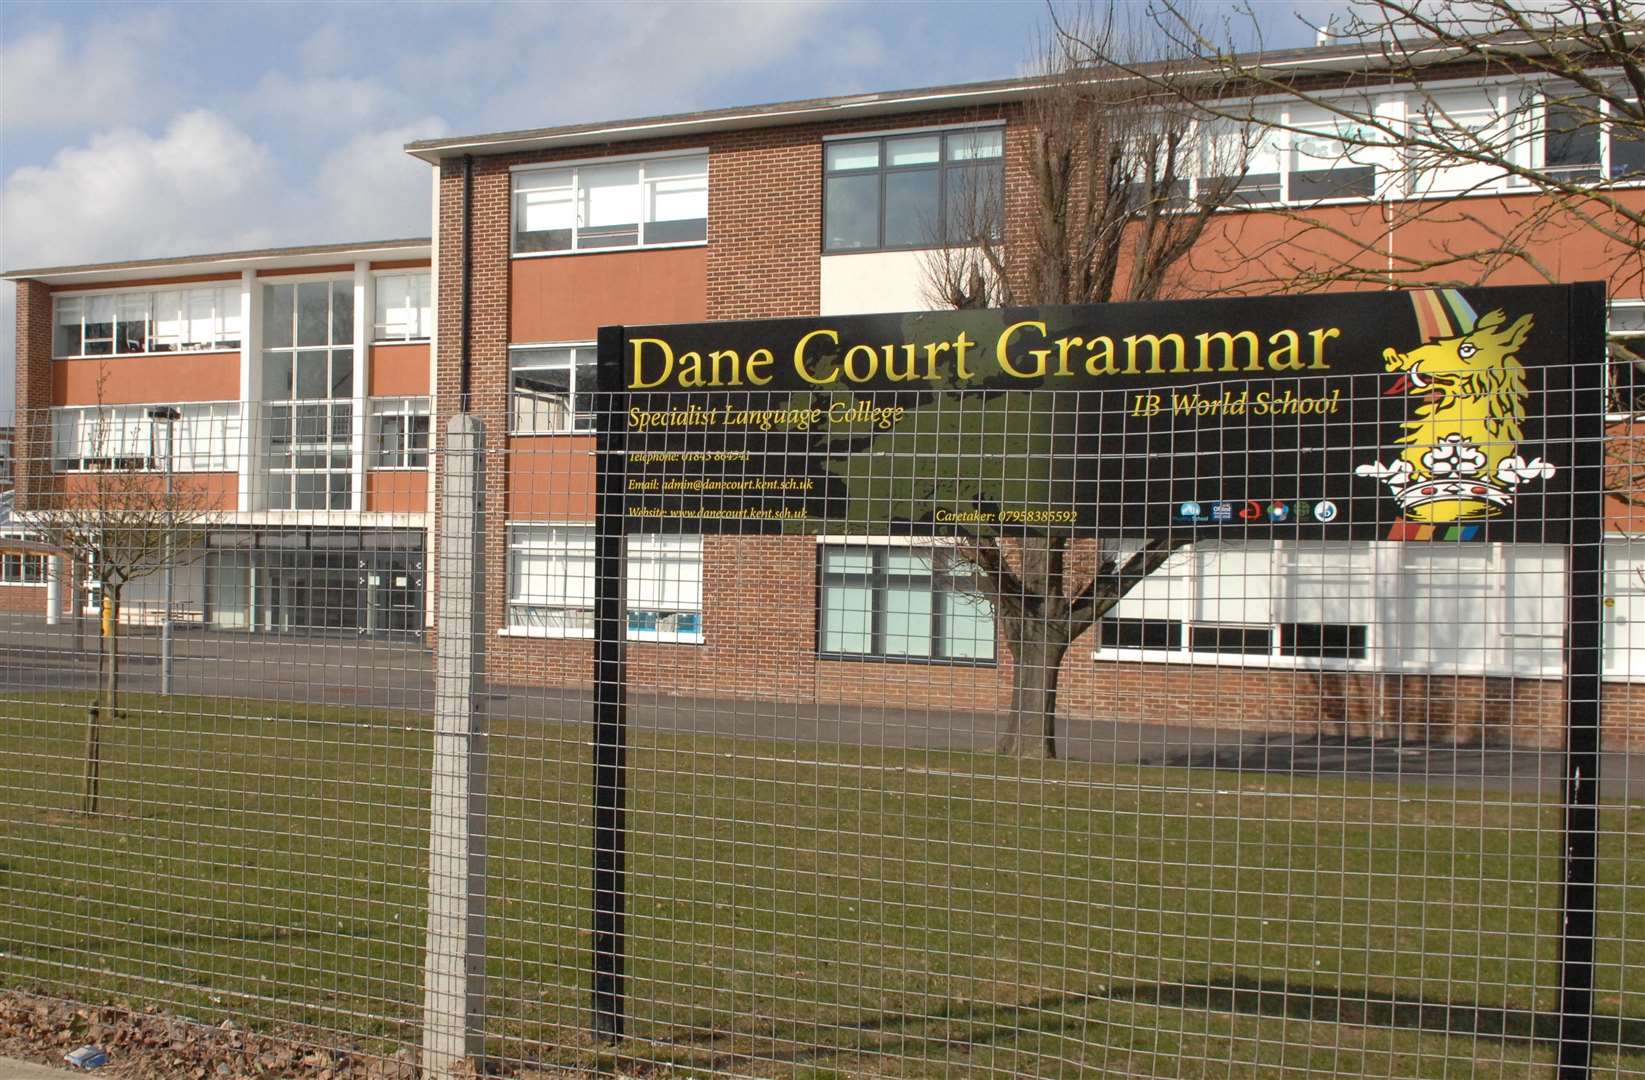 Dane Court Grammar School in Broadstairs